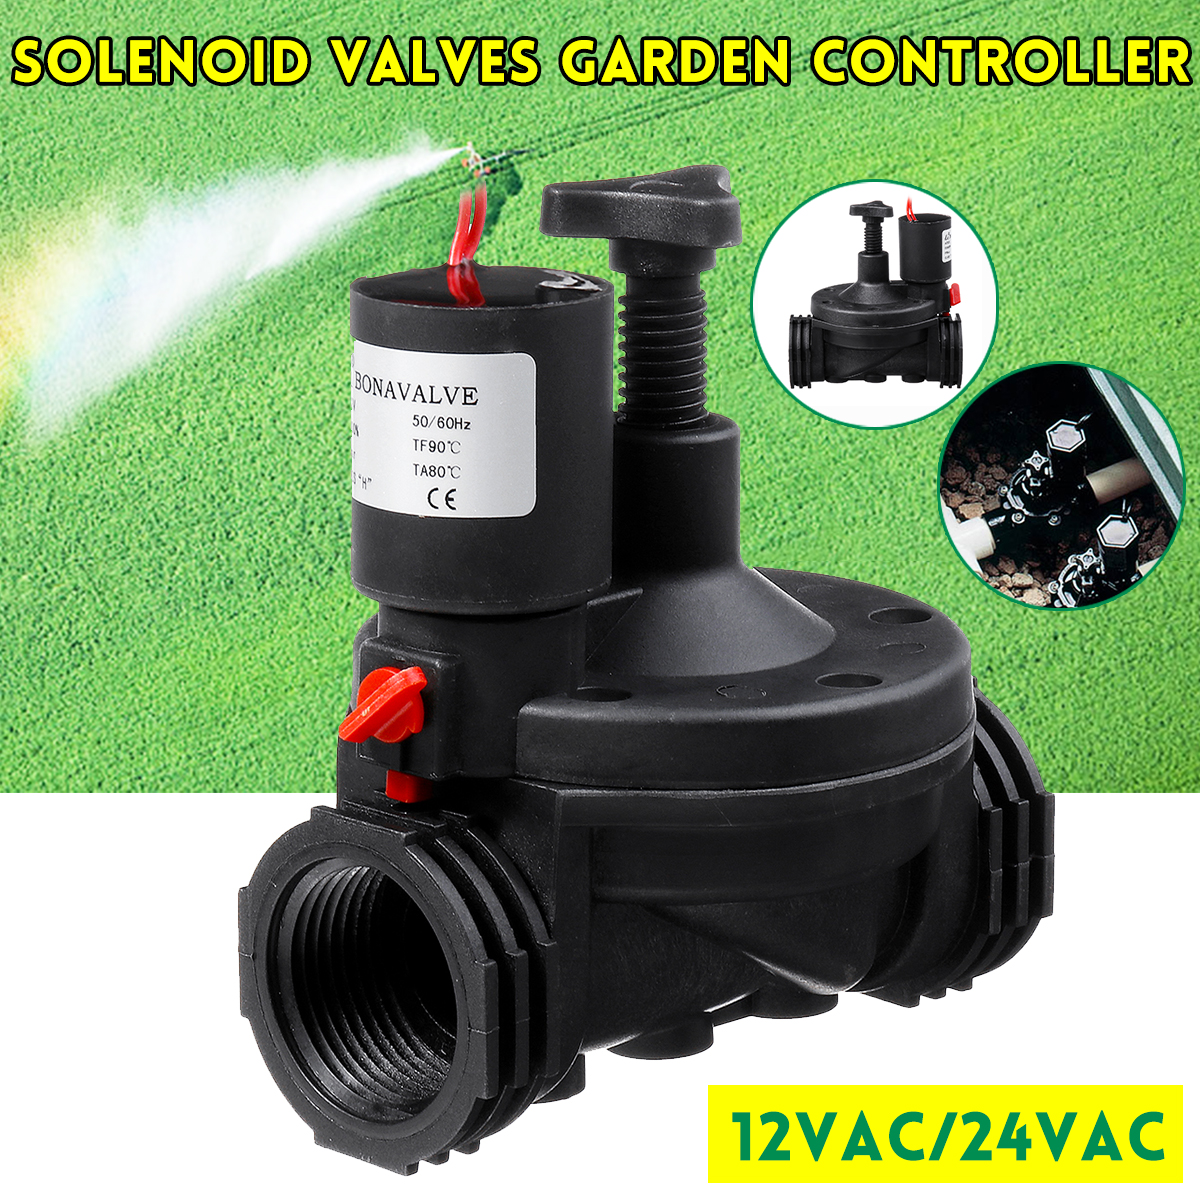 1-Inch-Industrial-Irrigation-Water-Valve-1224V-AC-Solenoid-Thread-Valve-Garden-Controller-1592342-2